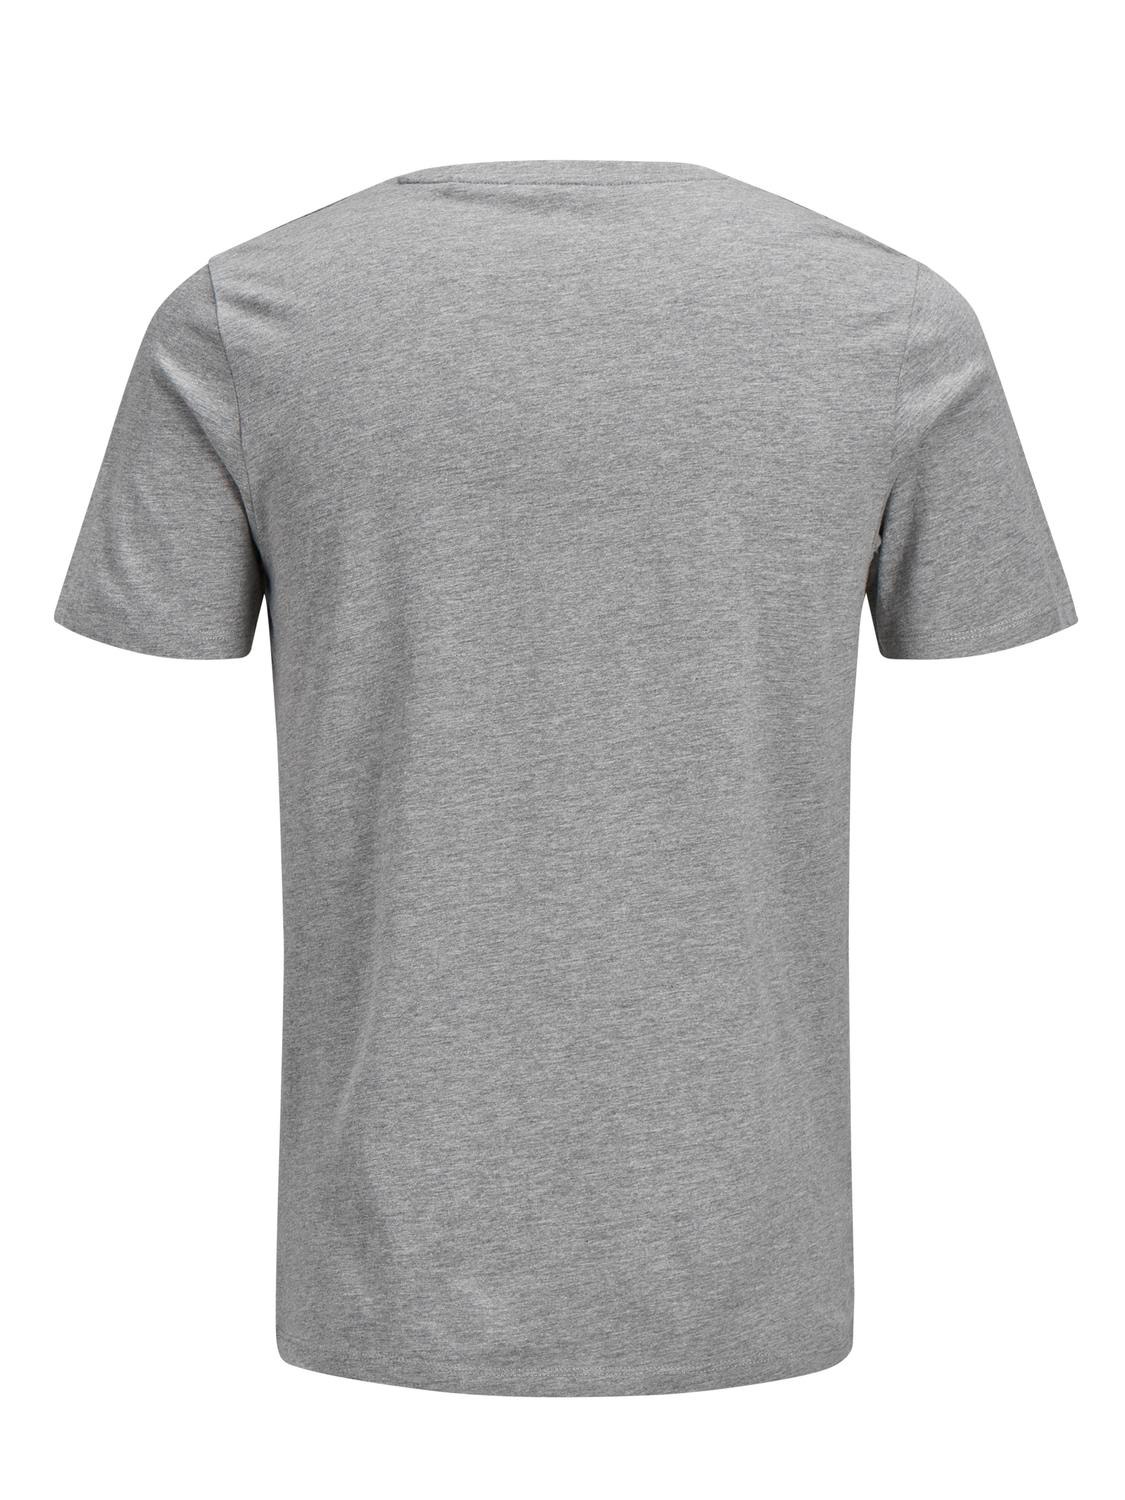 Jack & Jones T-shirt Logo Col rond -Light Grey Melange - 12137126